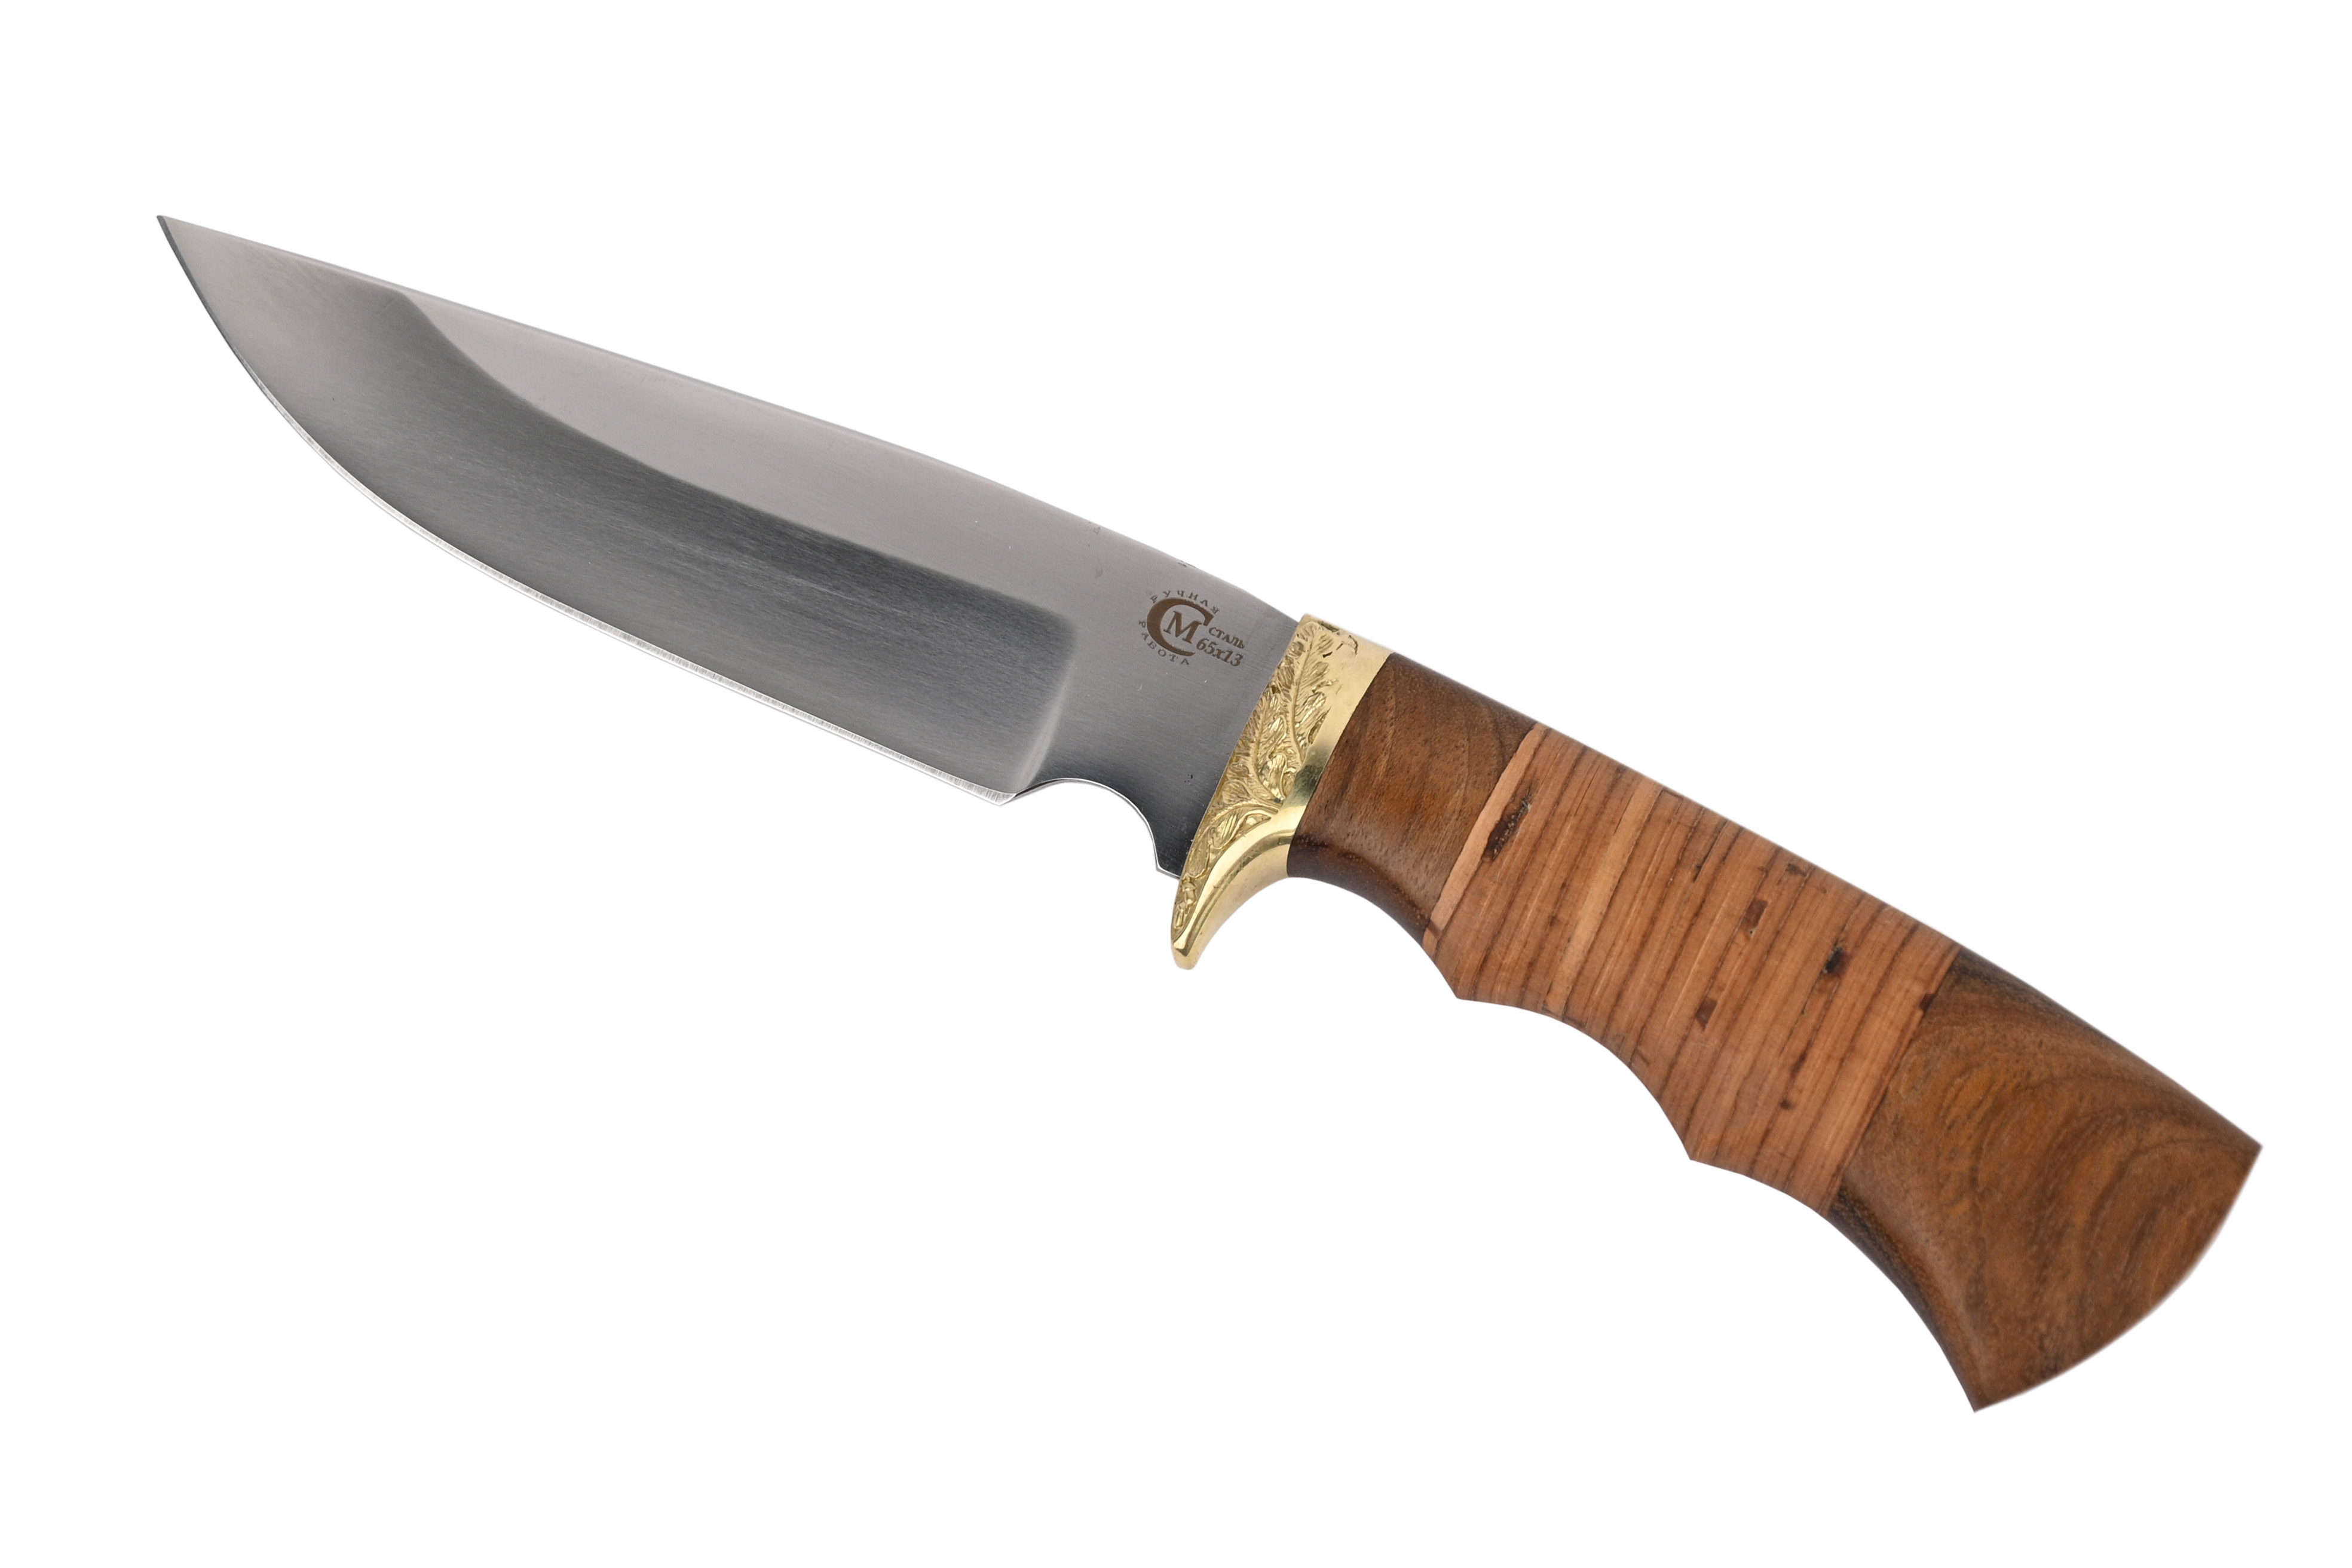 Нож ИП Семин Легионер сталь 65х13 литье береста - фото 1